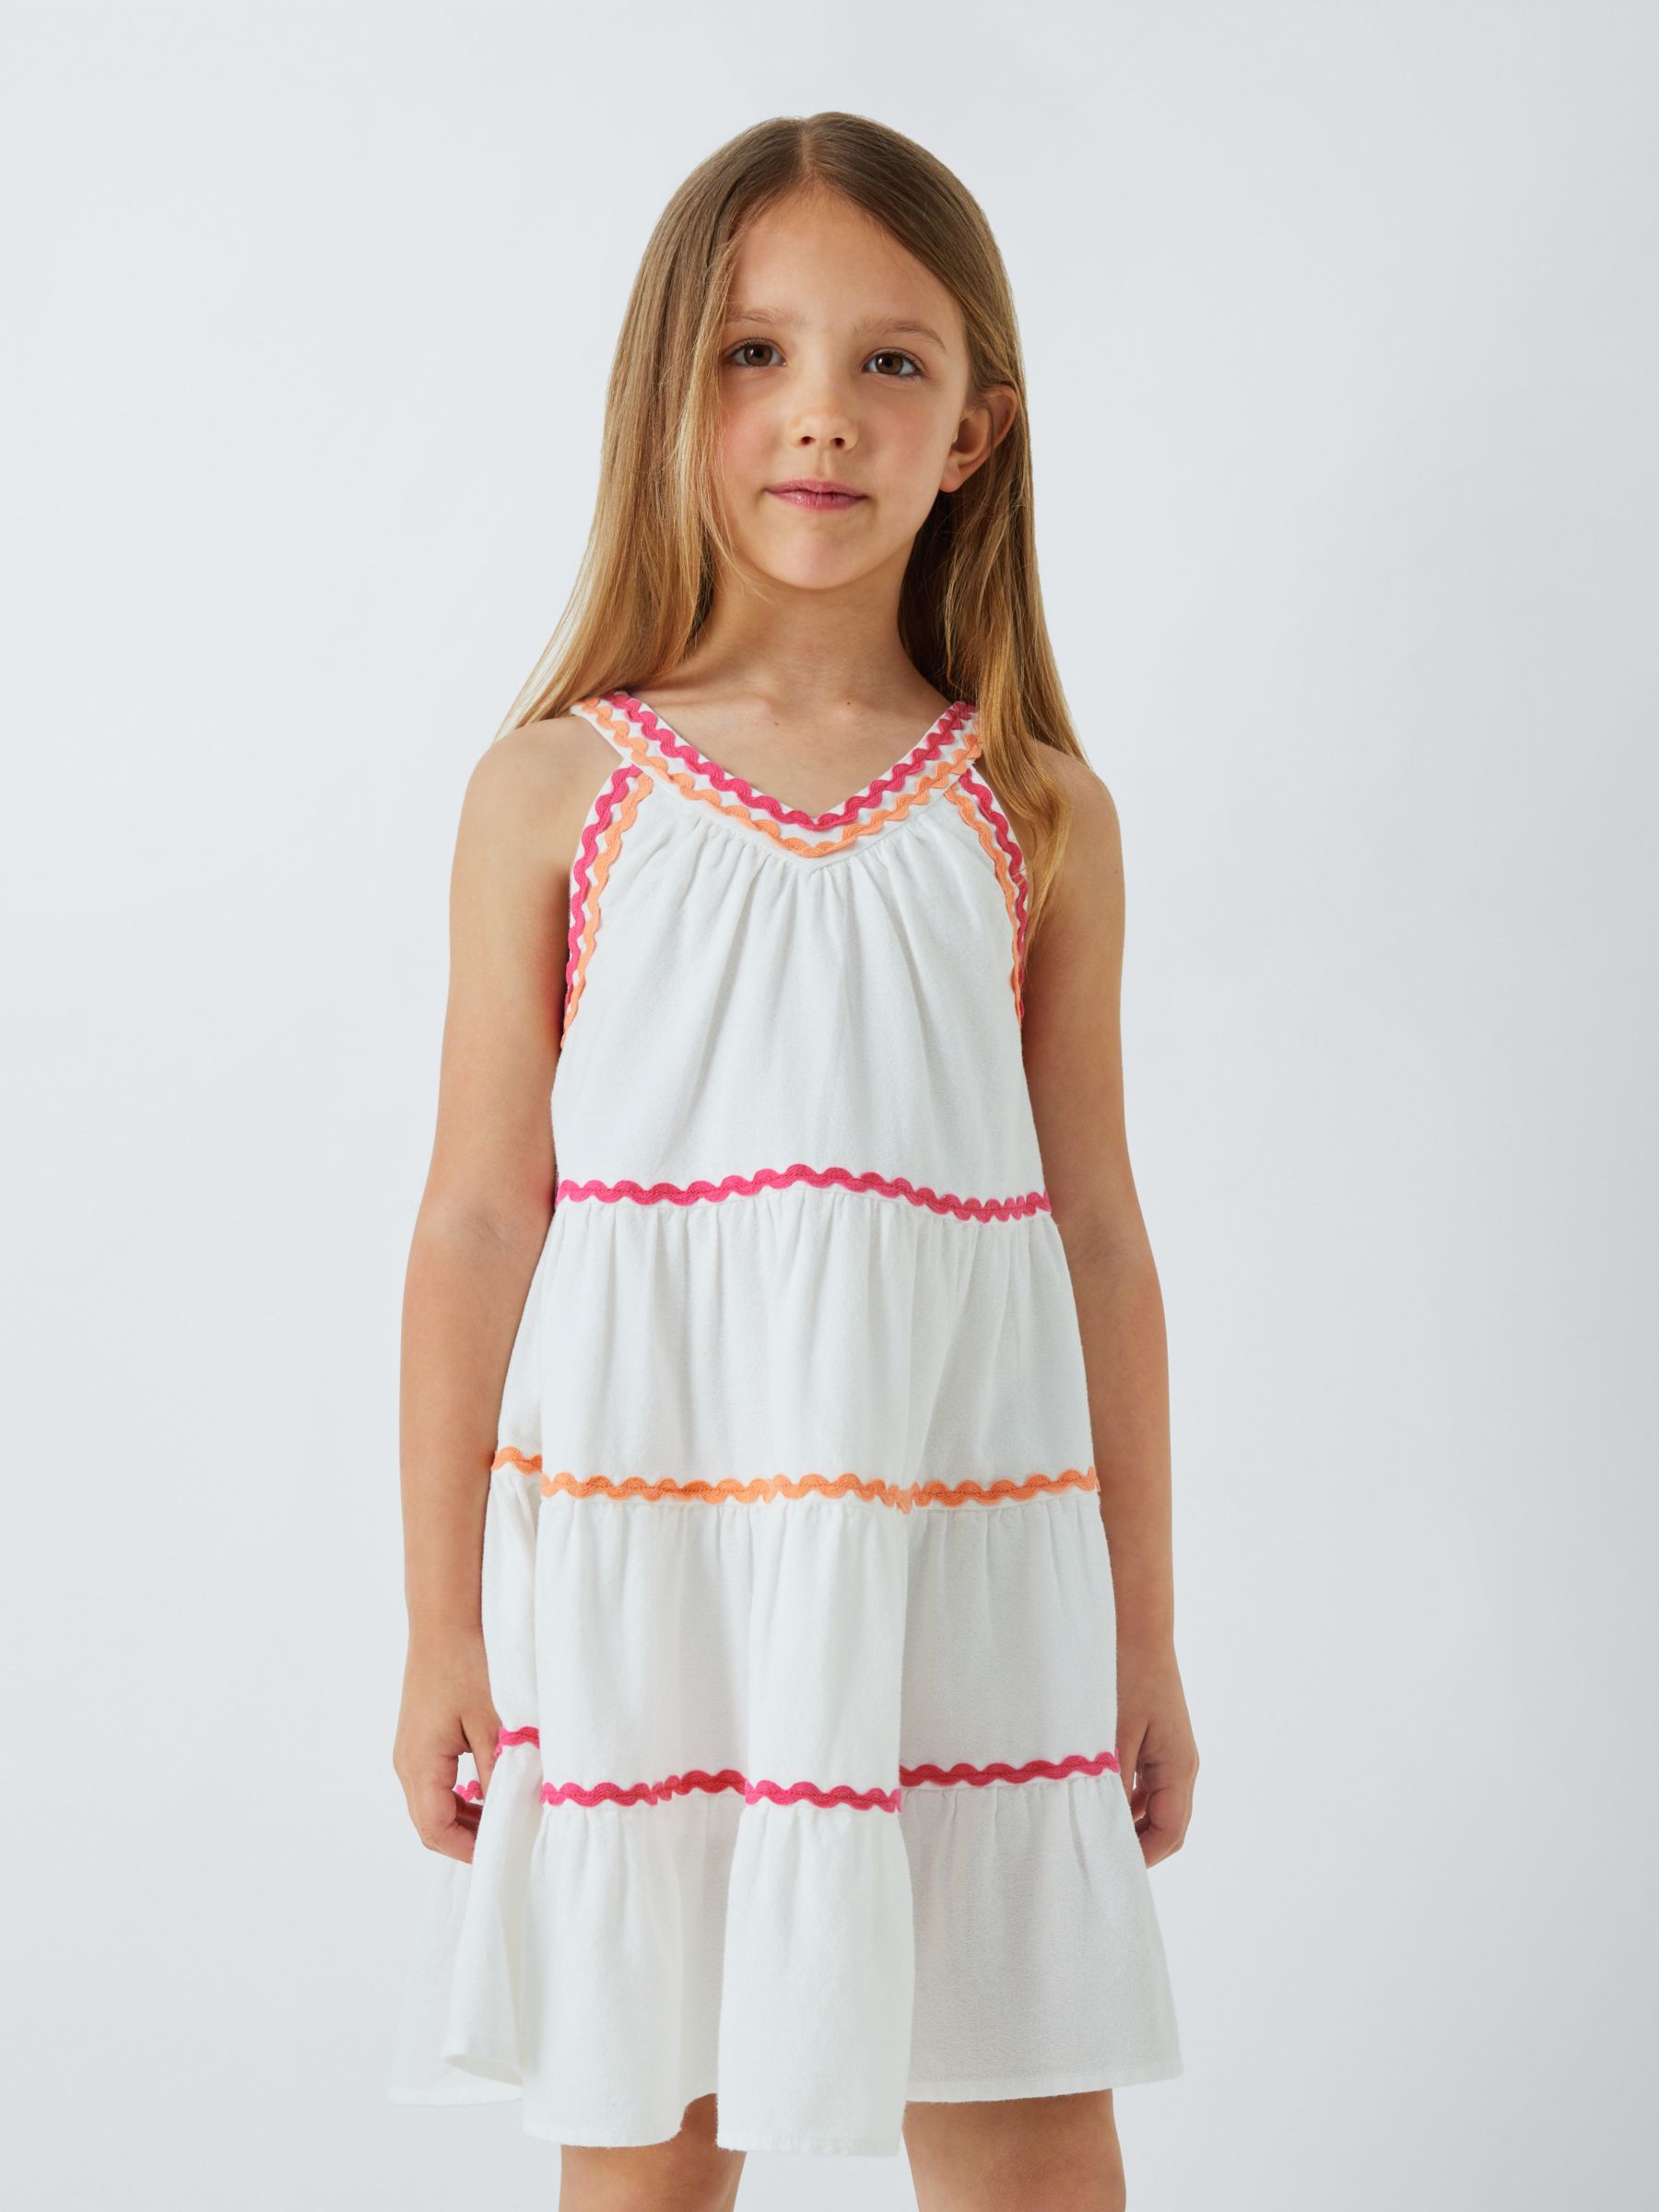 John Lewis Kids' Ric Rac Embroidered Dress, White, 4 years